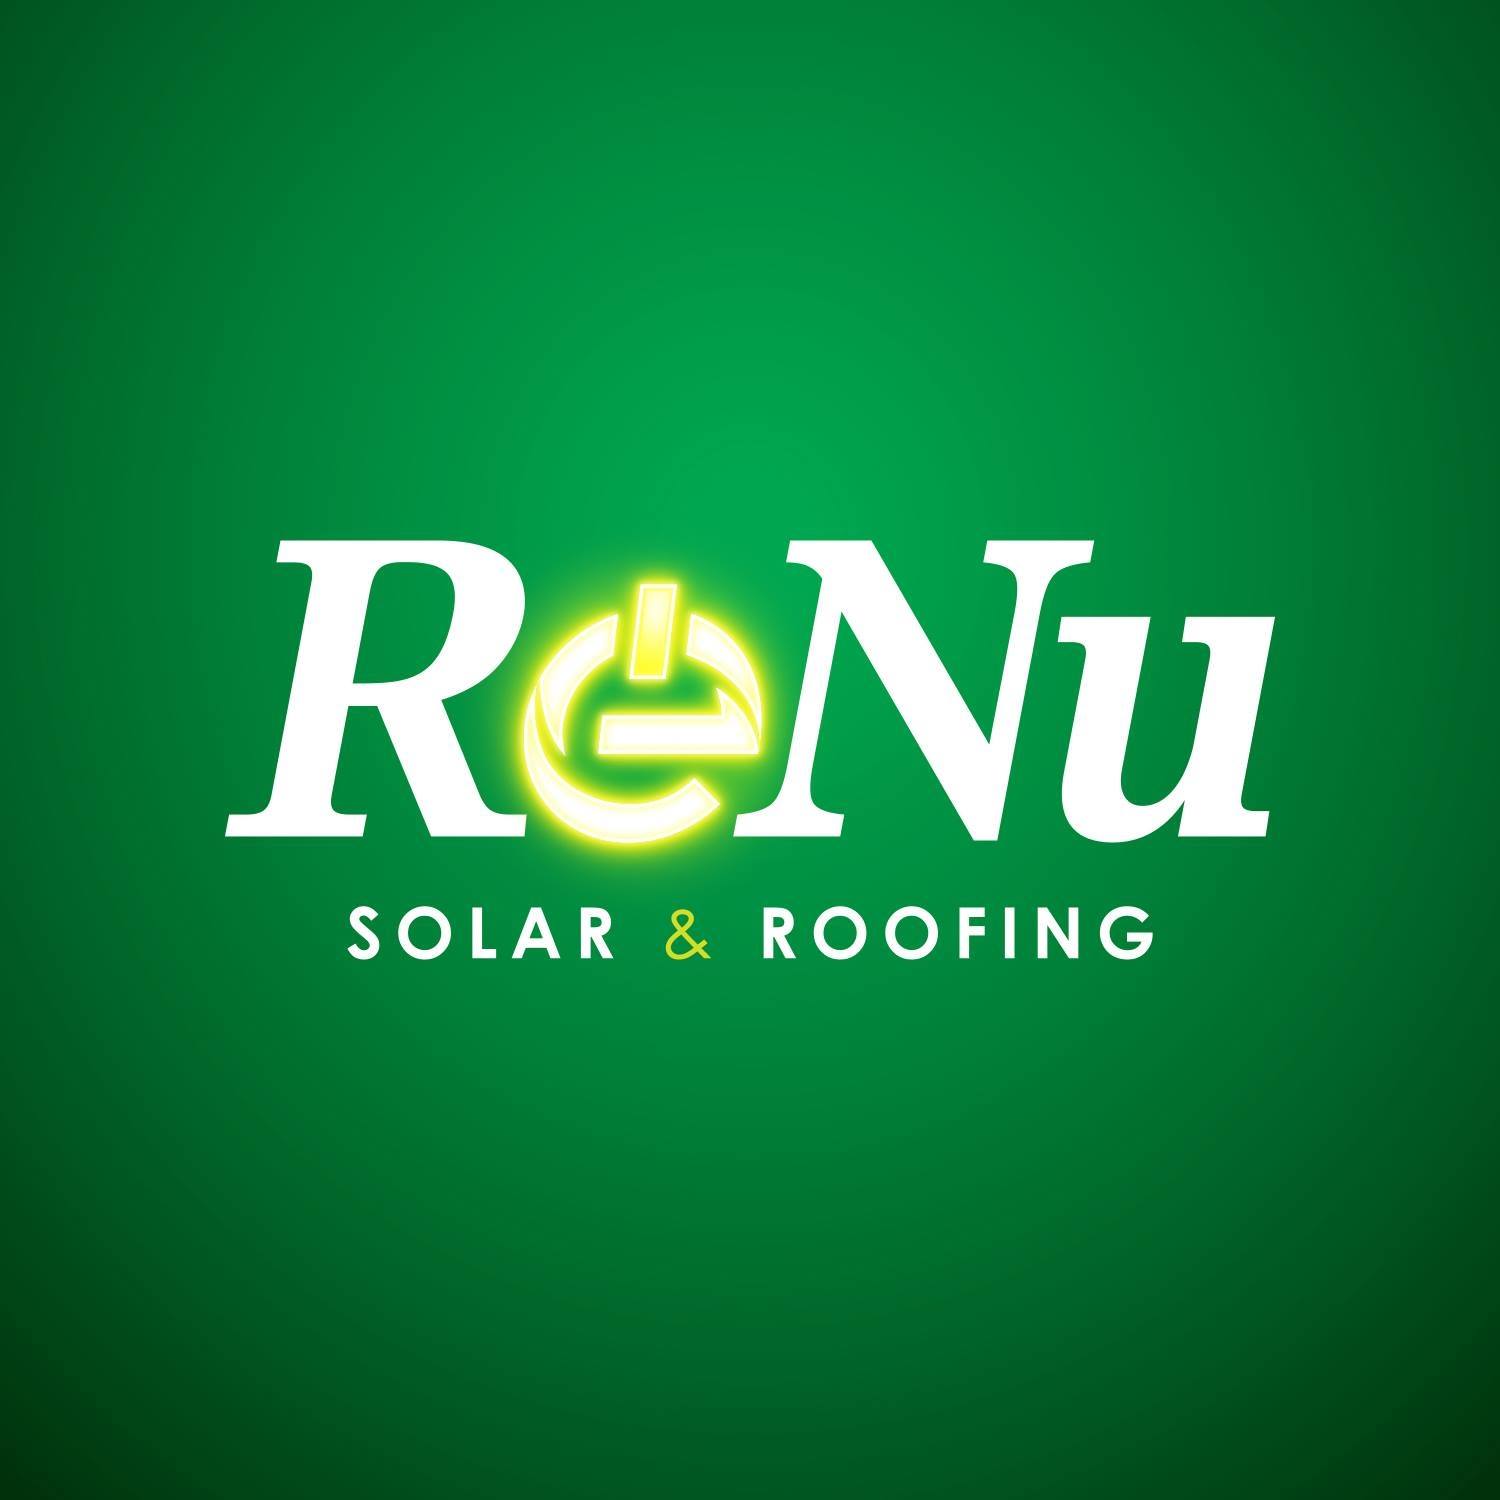 ReNu Solar & Roofing